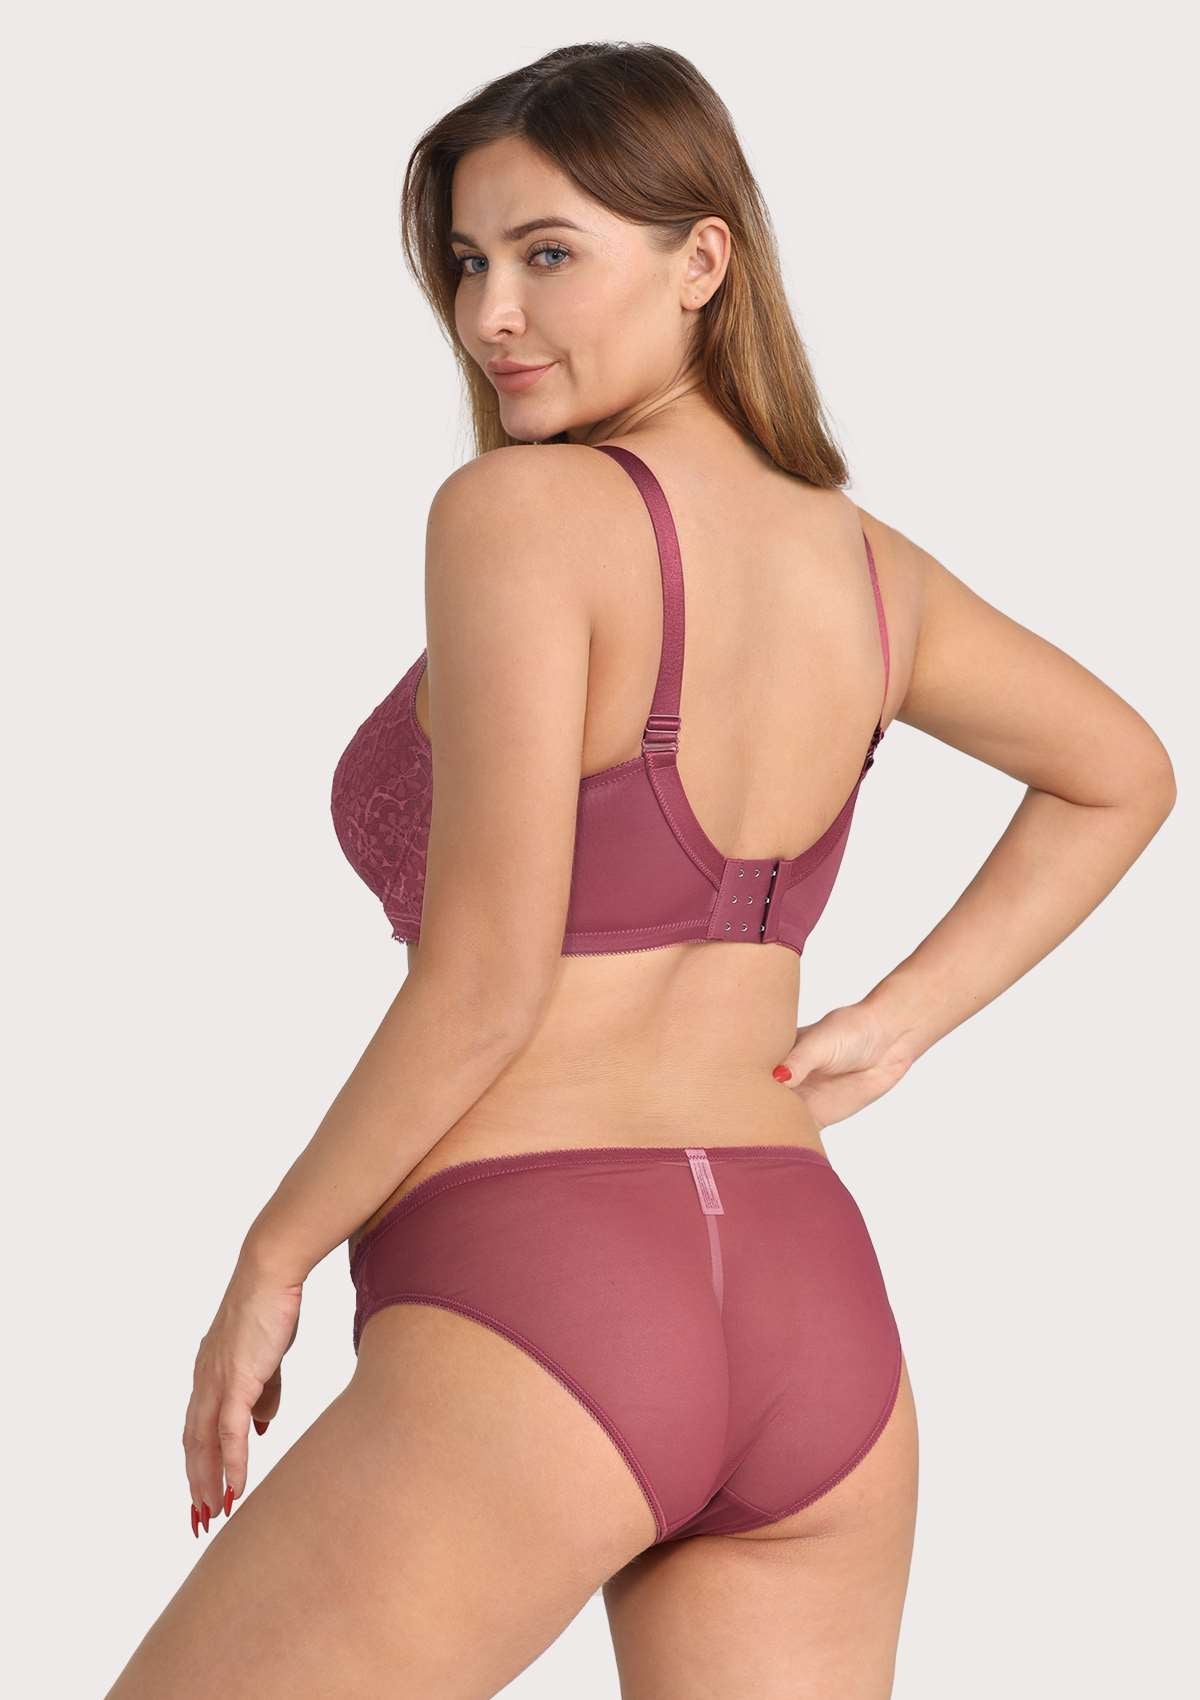 HSIA Anemone Sexy Lace Bra Panty Set: Thick Strap Bra - Burgundy / 42 / C